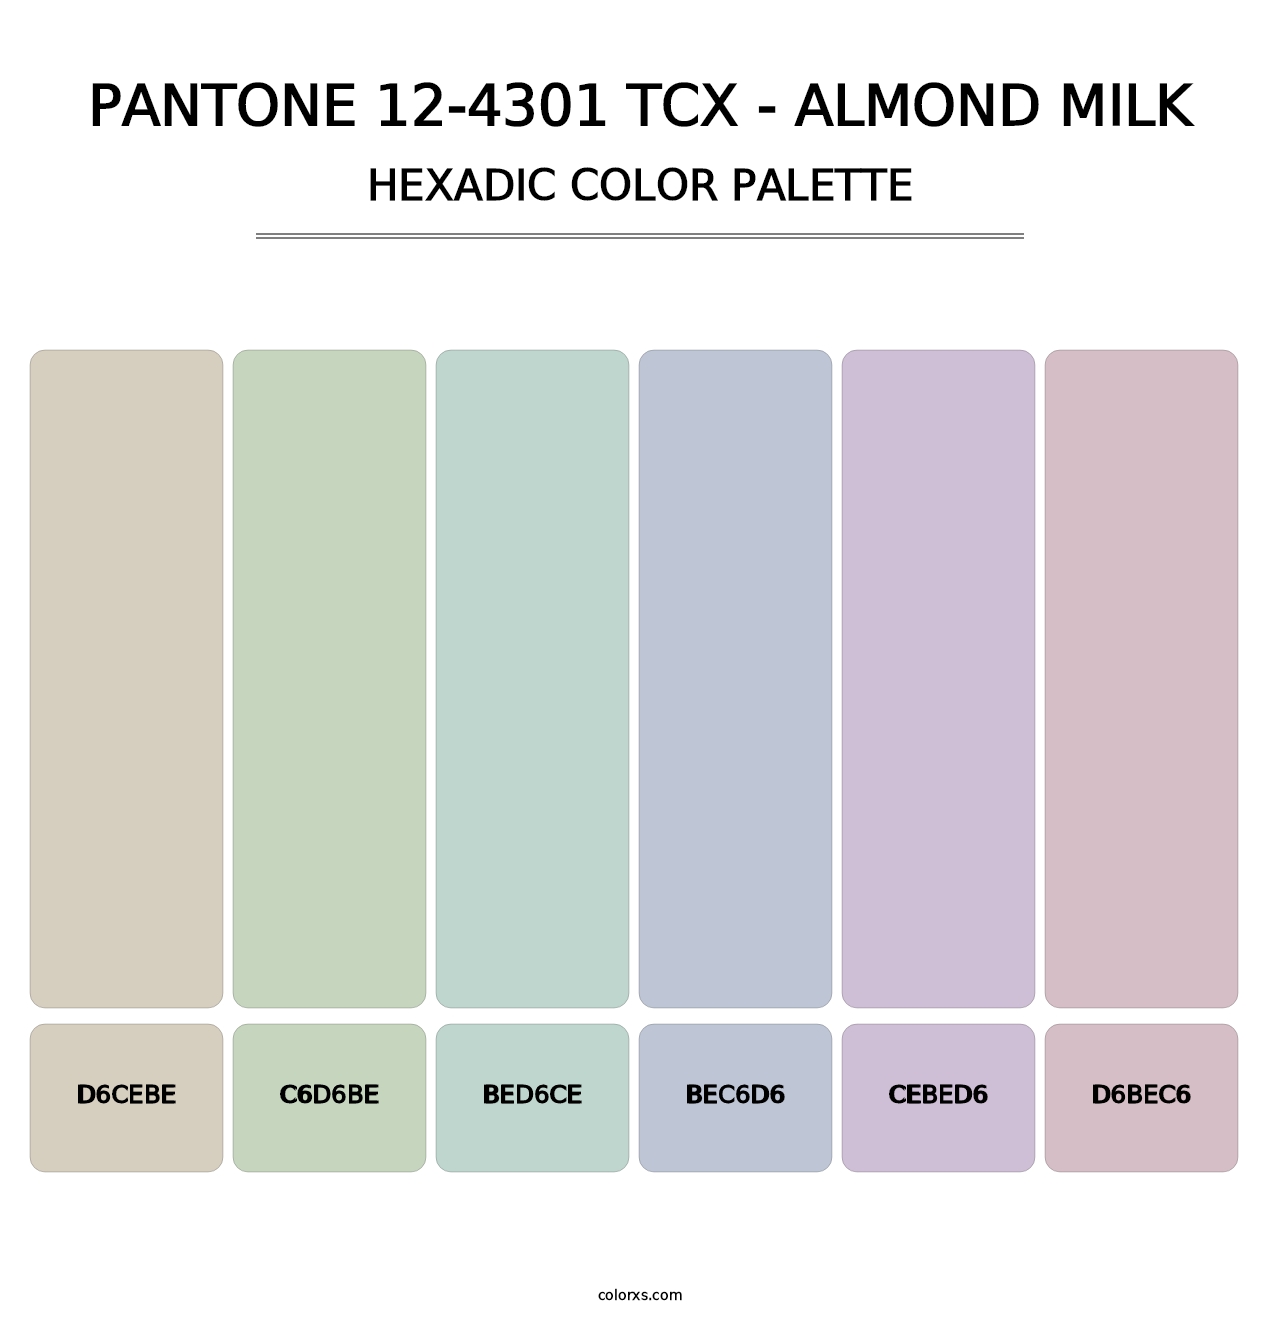 PANTONE 12-4301 TCX - Almond Milk - Hexadic Color Palette